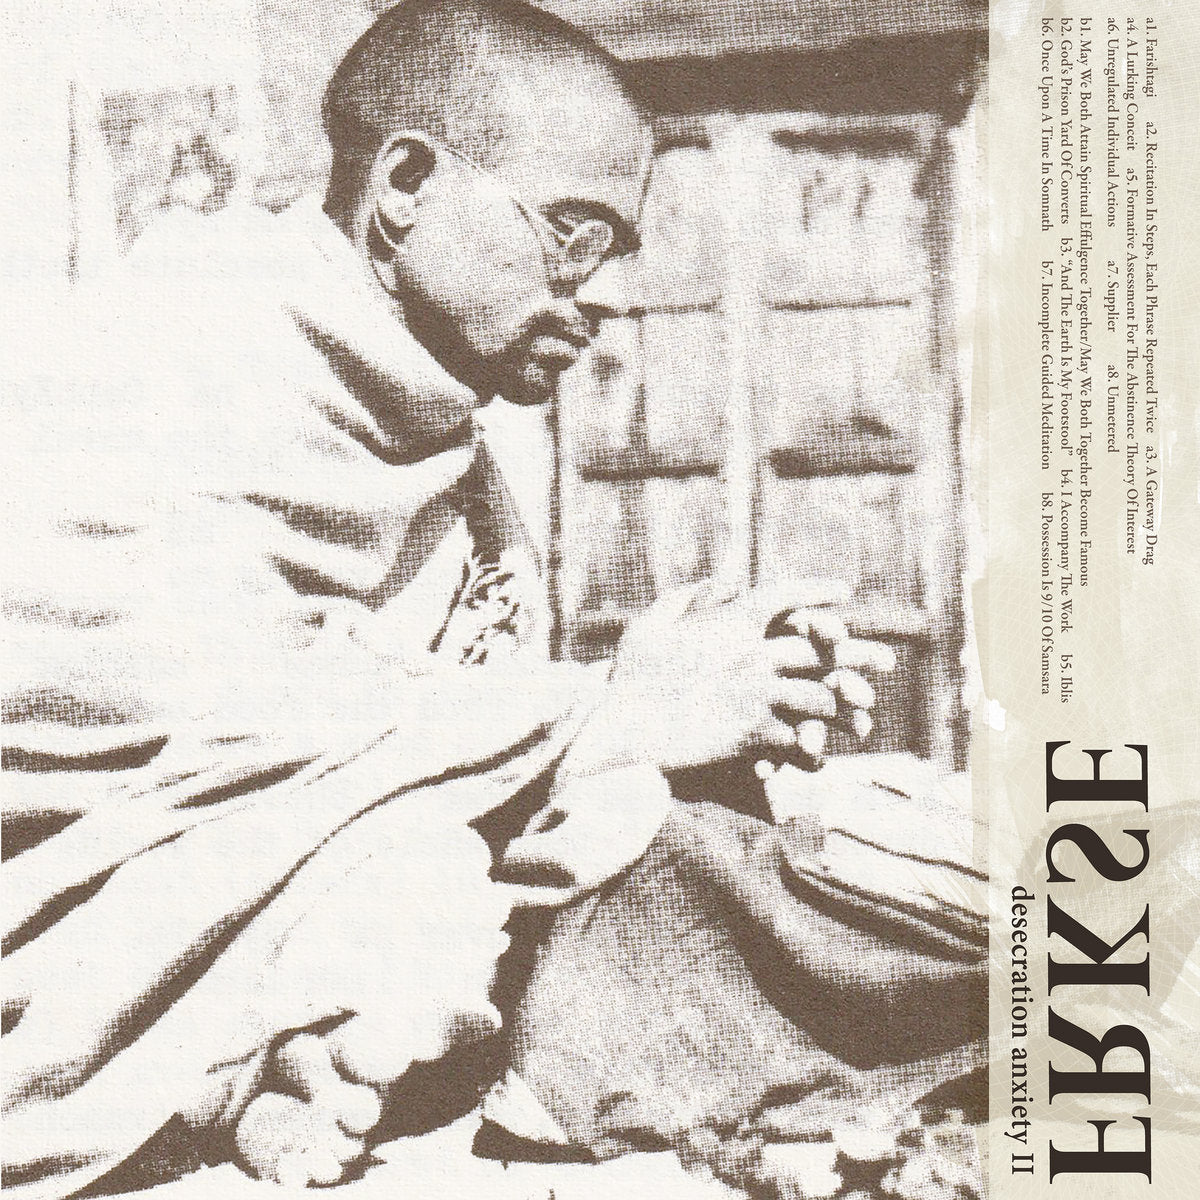 FRSKE - DESECRATION ANXIETY II Vinyl LP